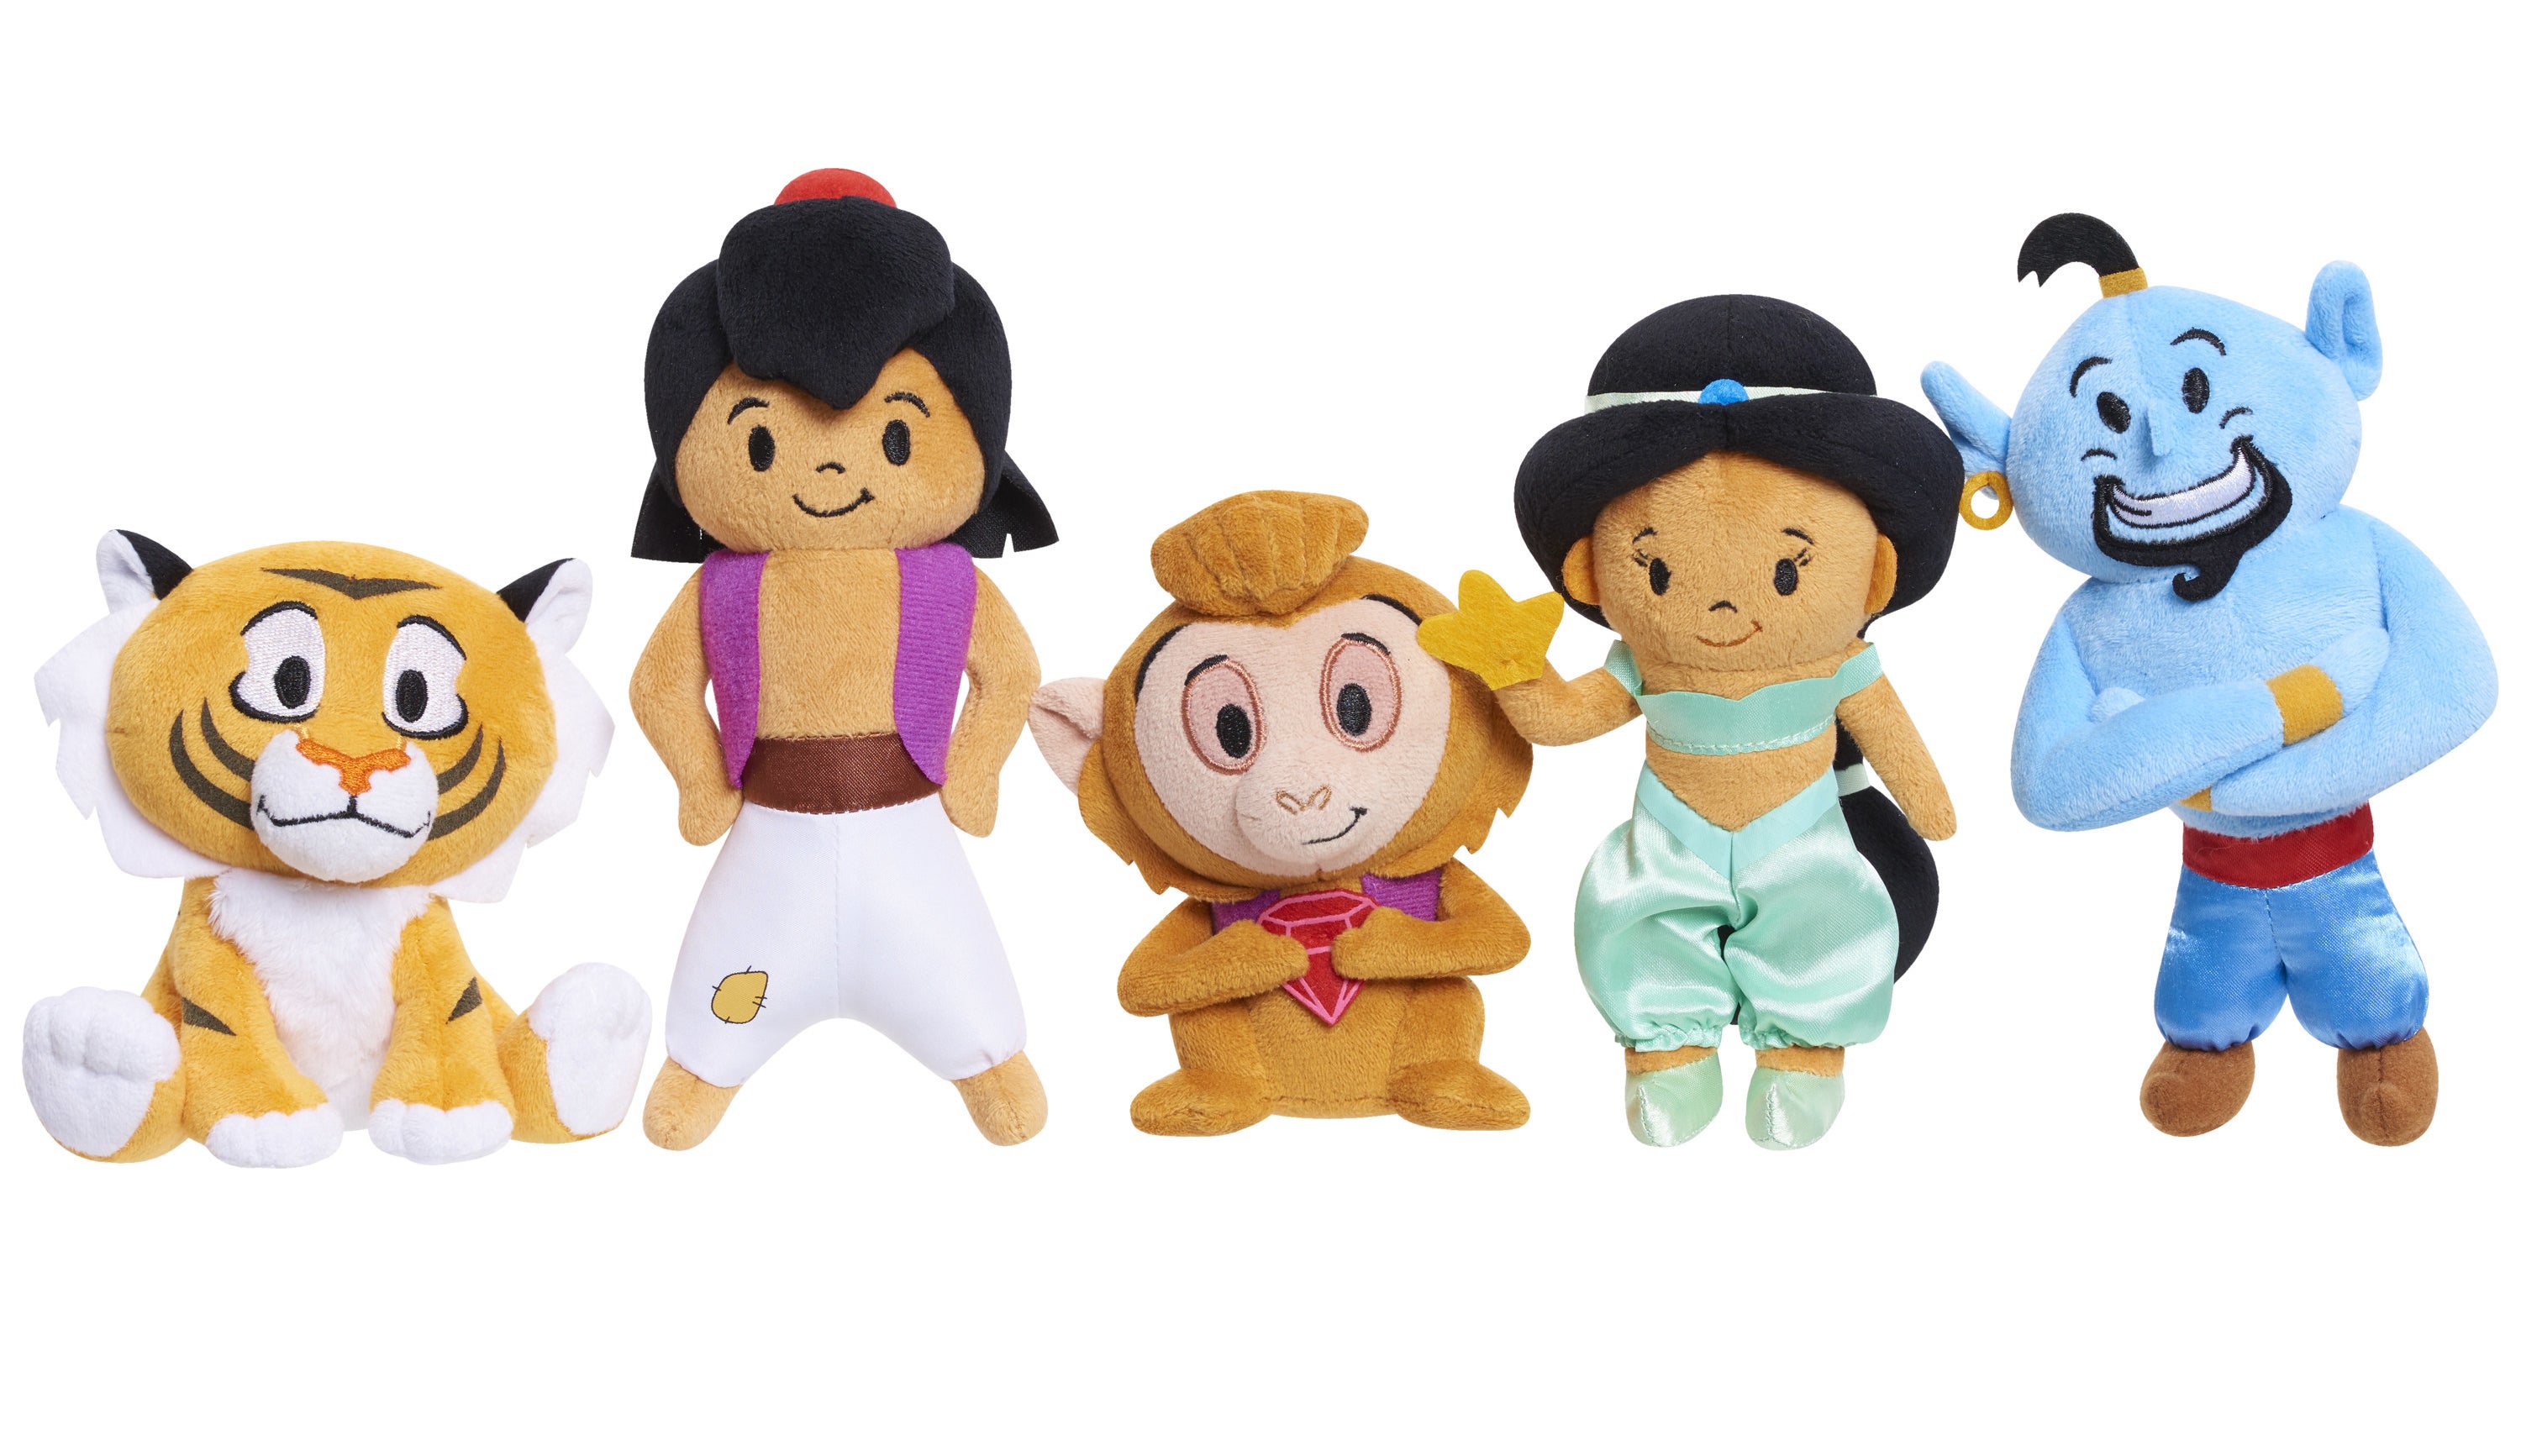 The plush toys, including  Aladdin, Jasmine, Genie, Abu, and Rajah